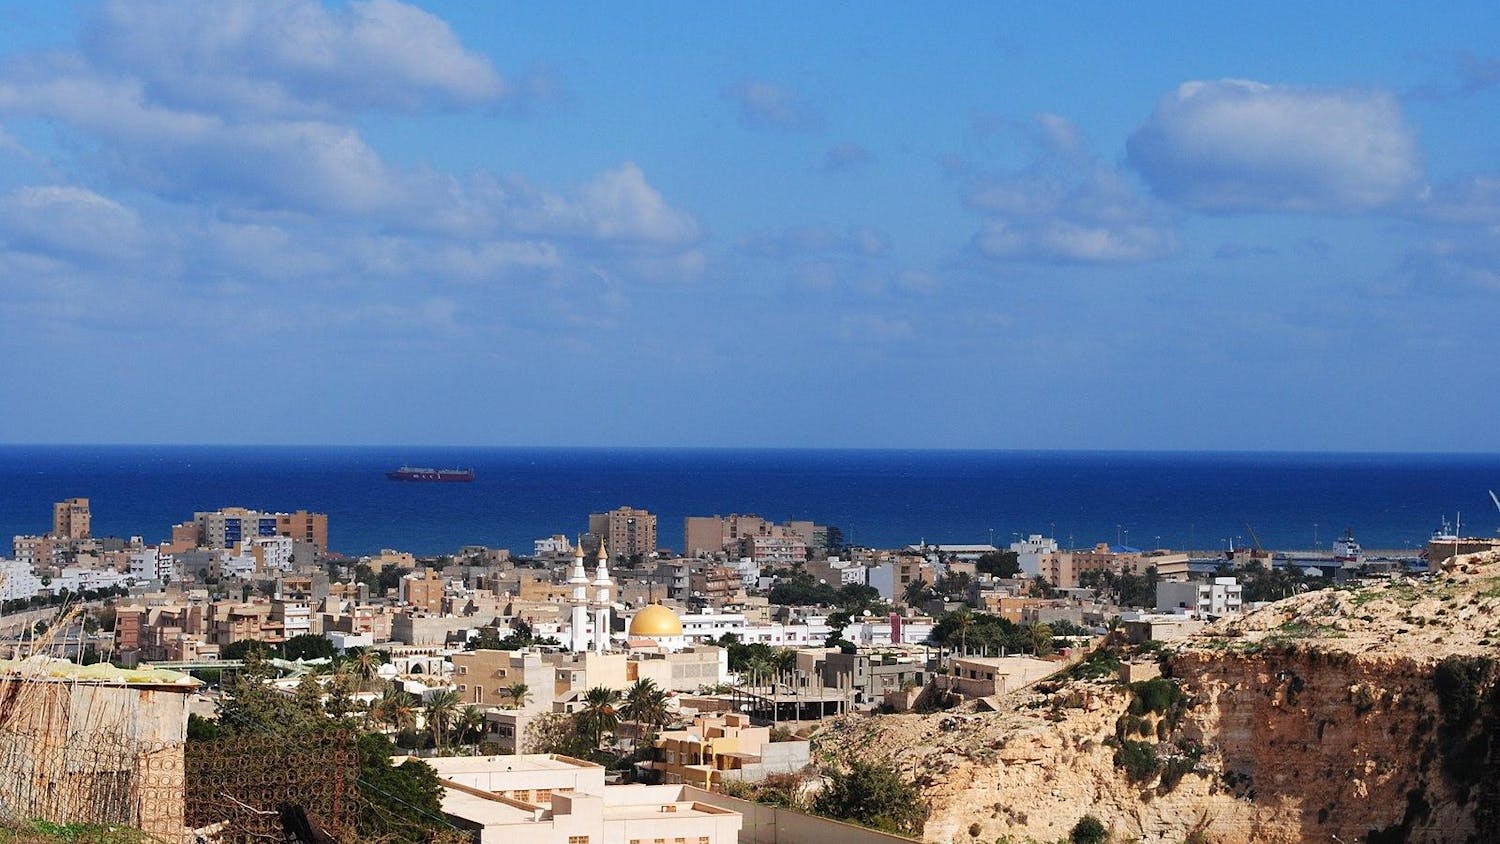 City of Derna, Libya, is pictured.